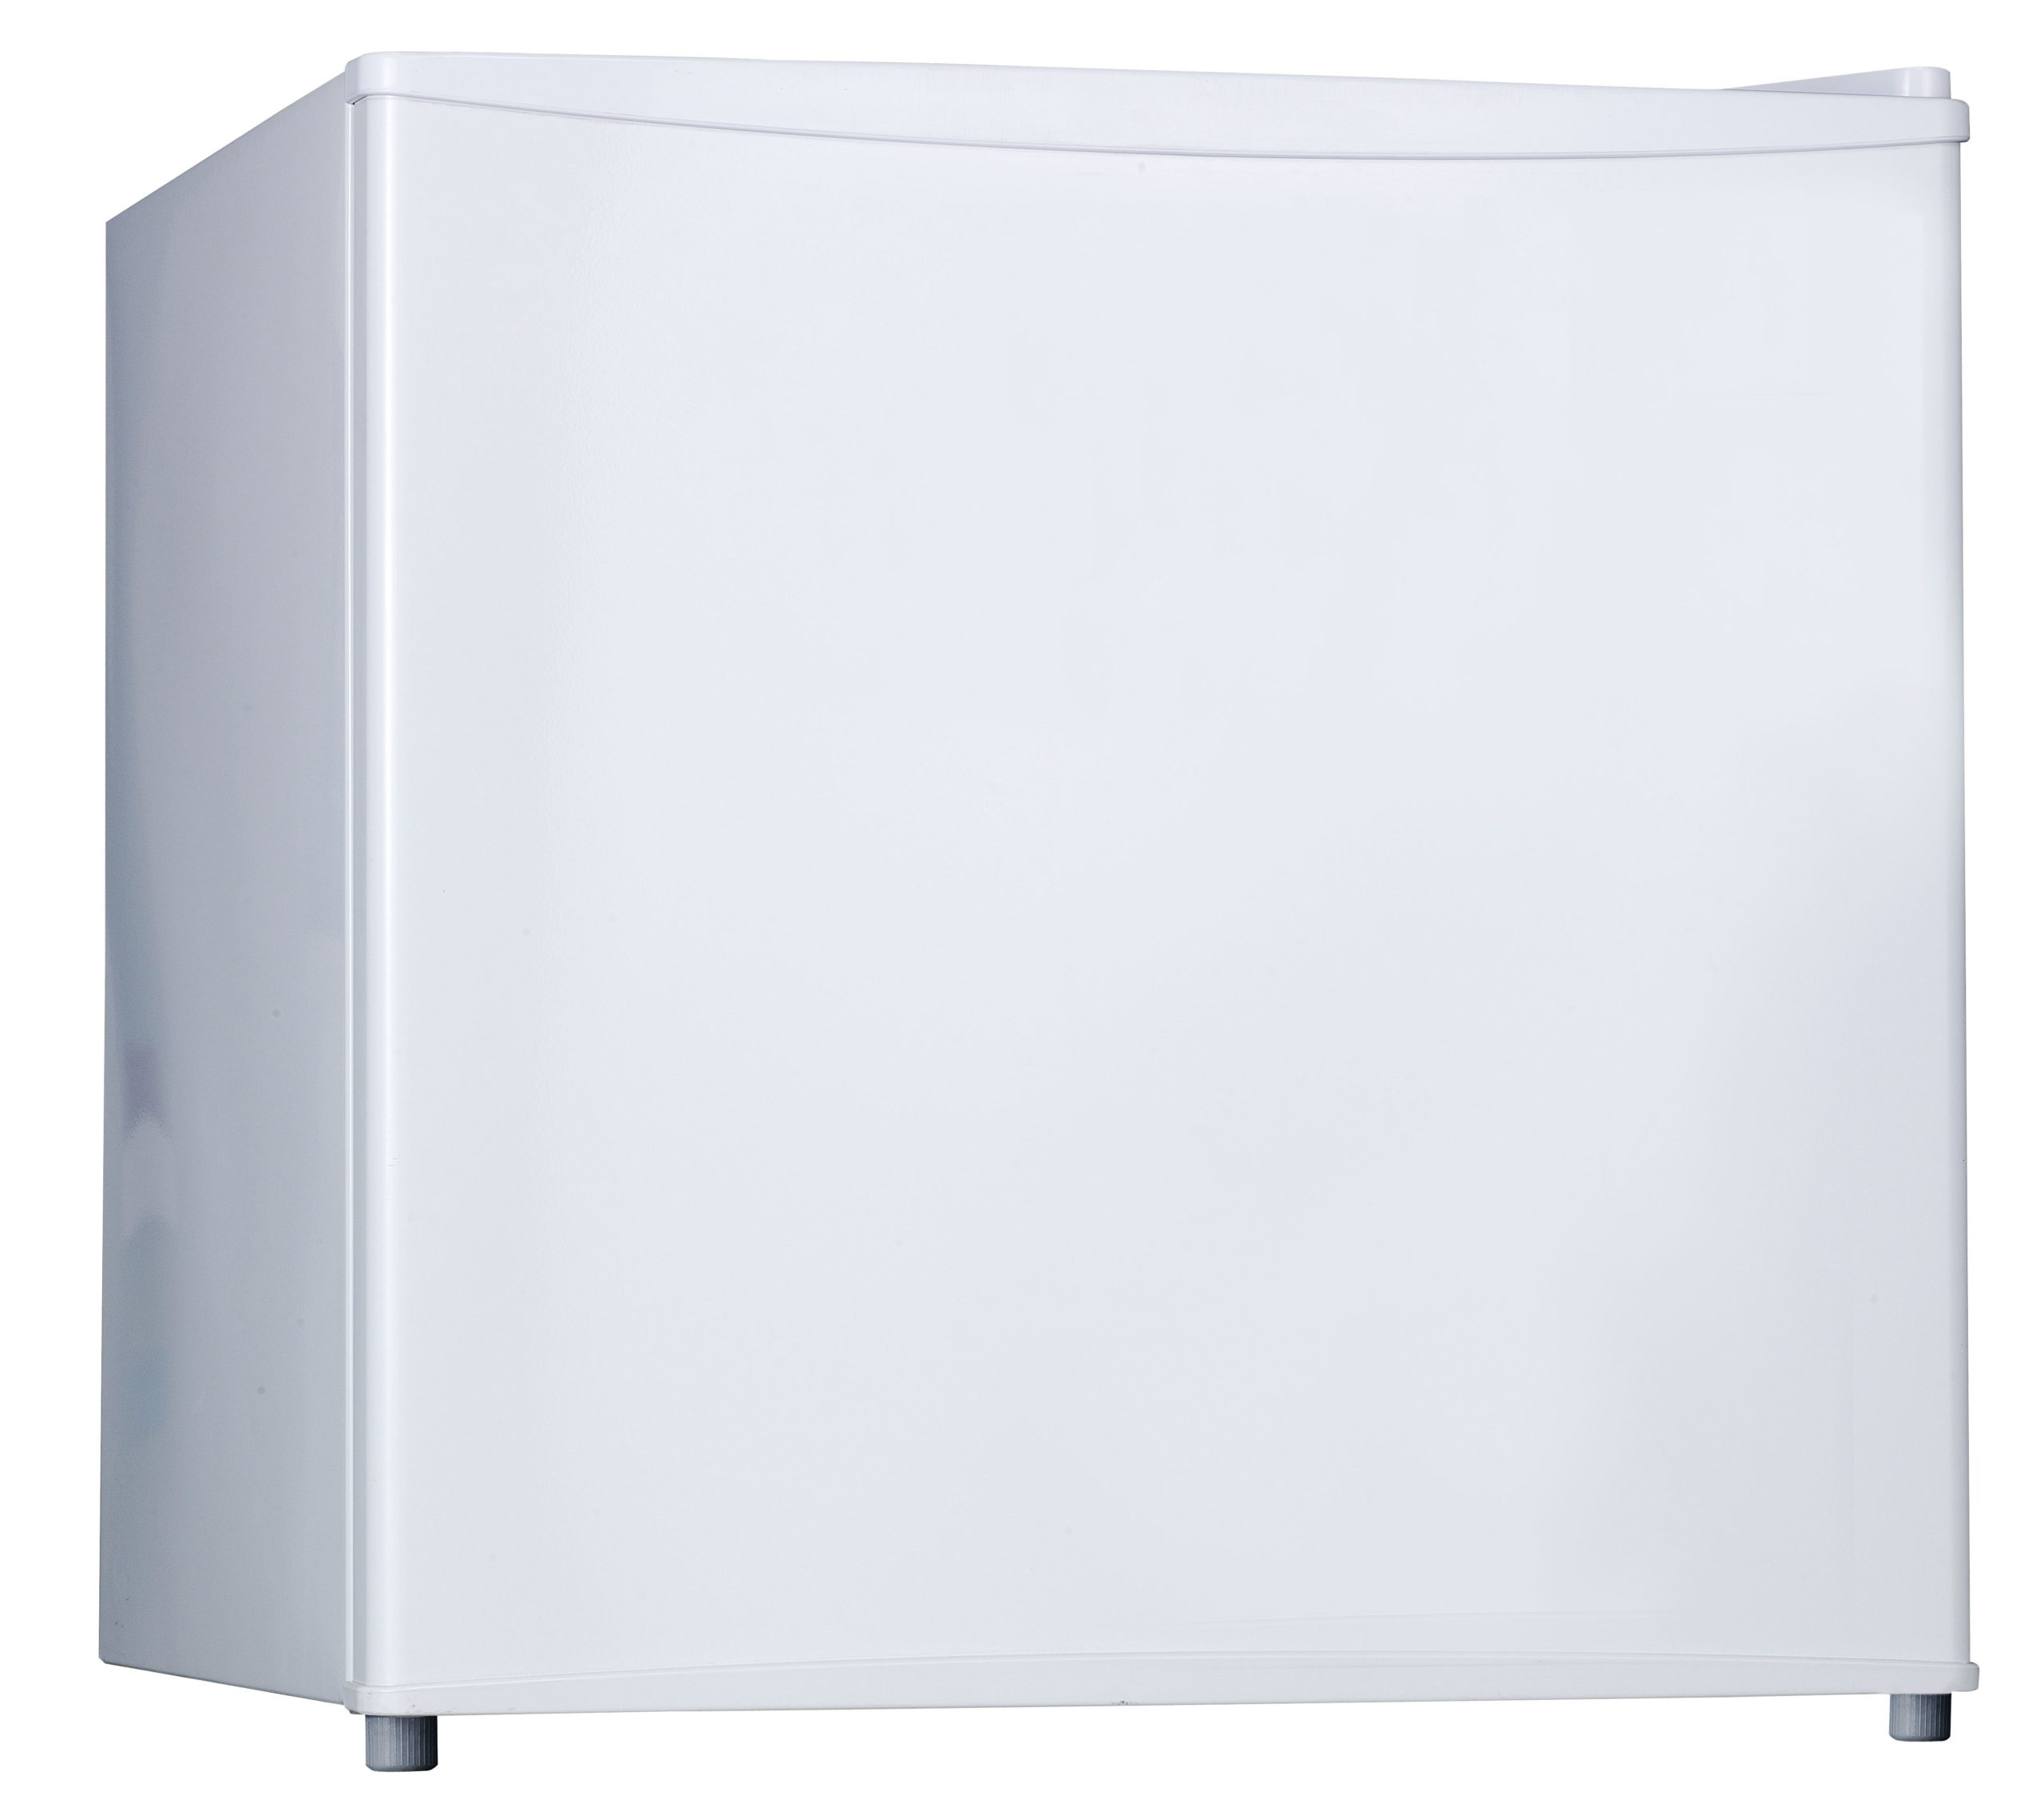 SILVA-HOMELINE KB 1550 Kühlschrank cm 49,2 (F, weiß) hoch